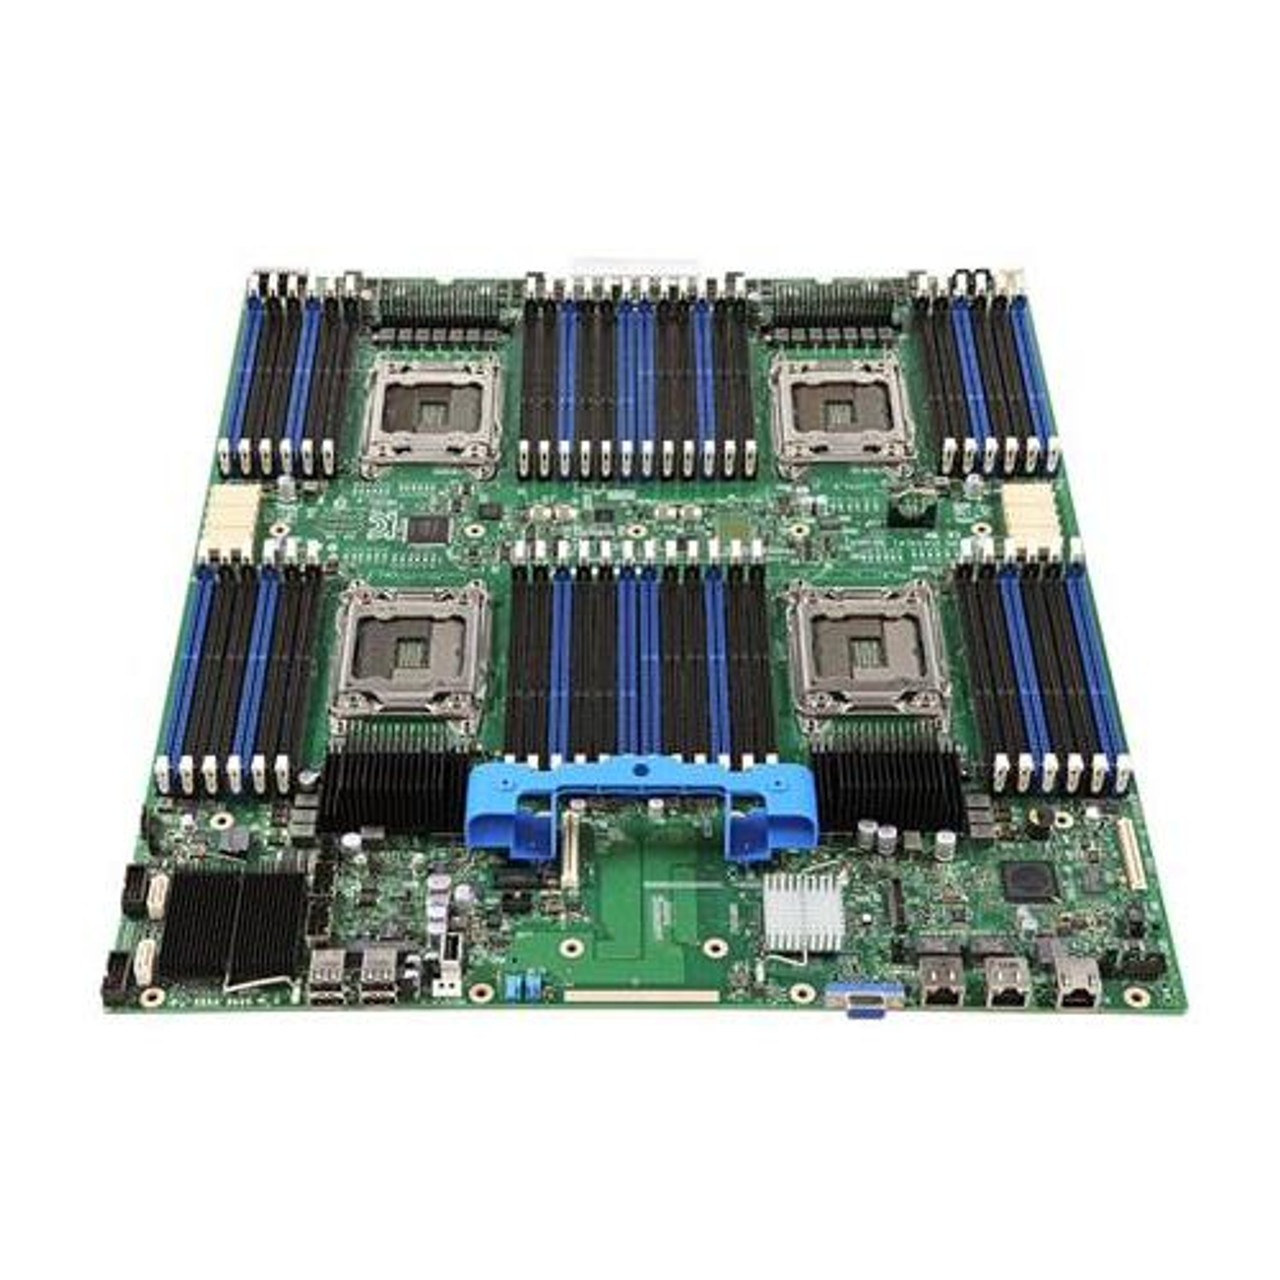 Ddr5 сокет. Сокет Xeon LGA 2011 материнская плата. Четырехпроцессорная материнская плата 2011-3. Lga2011-3 серверная Материнские платы. Intel Server Board s1200v3rp.